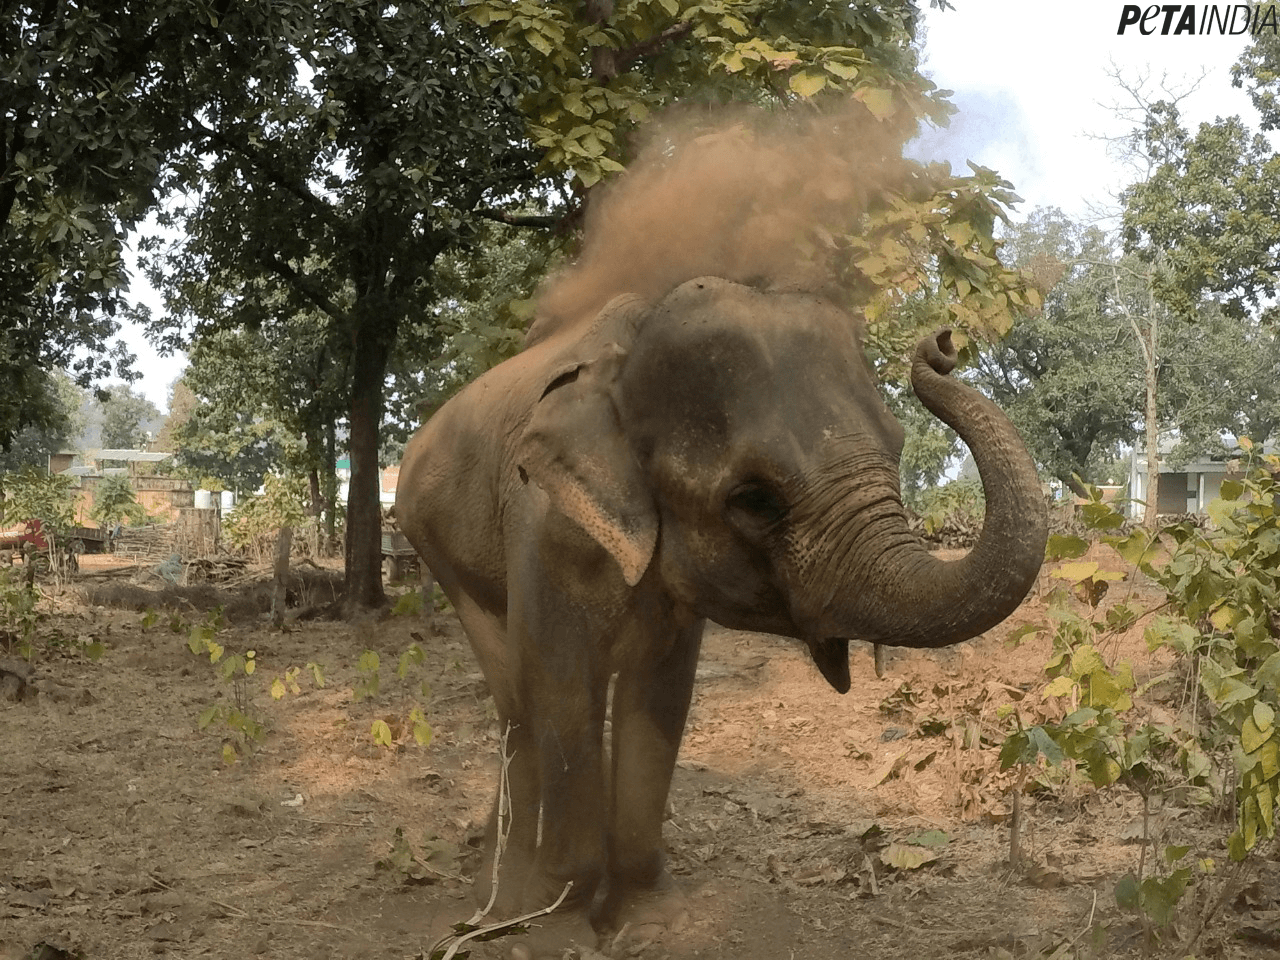 GREAT NEWS! ‘India’s Skinniest Elephant’, Lakshmi, to Be Rehabilitated, Following PETA India Campaign